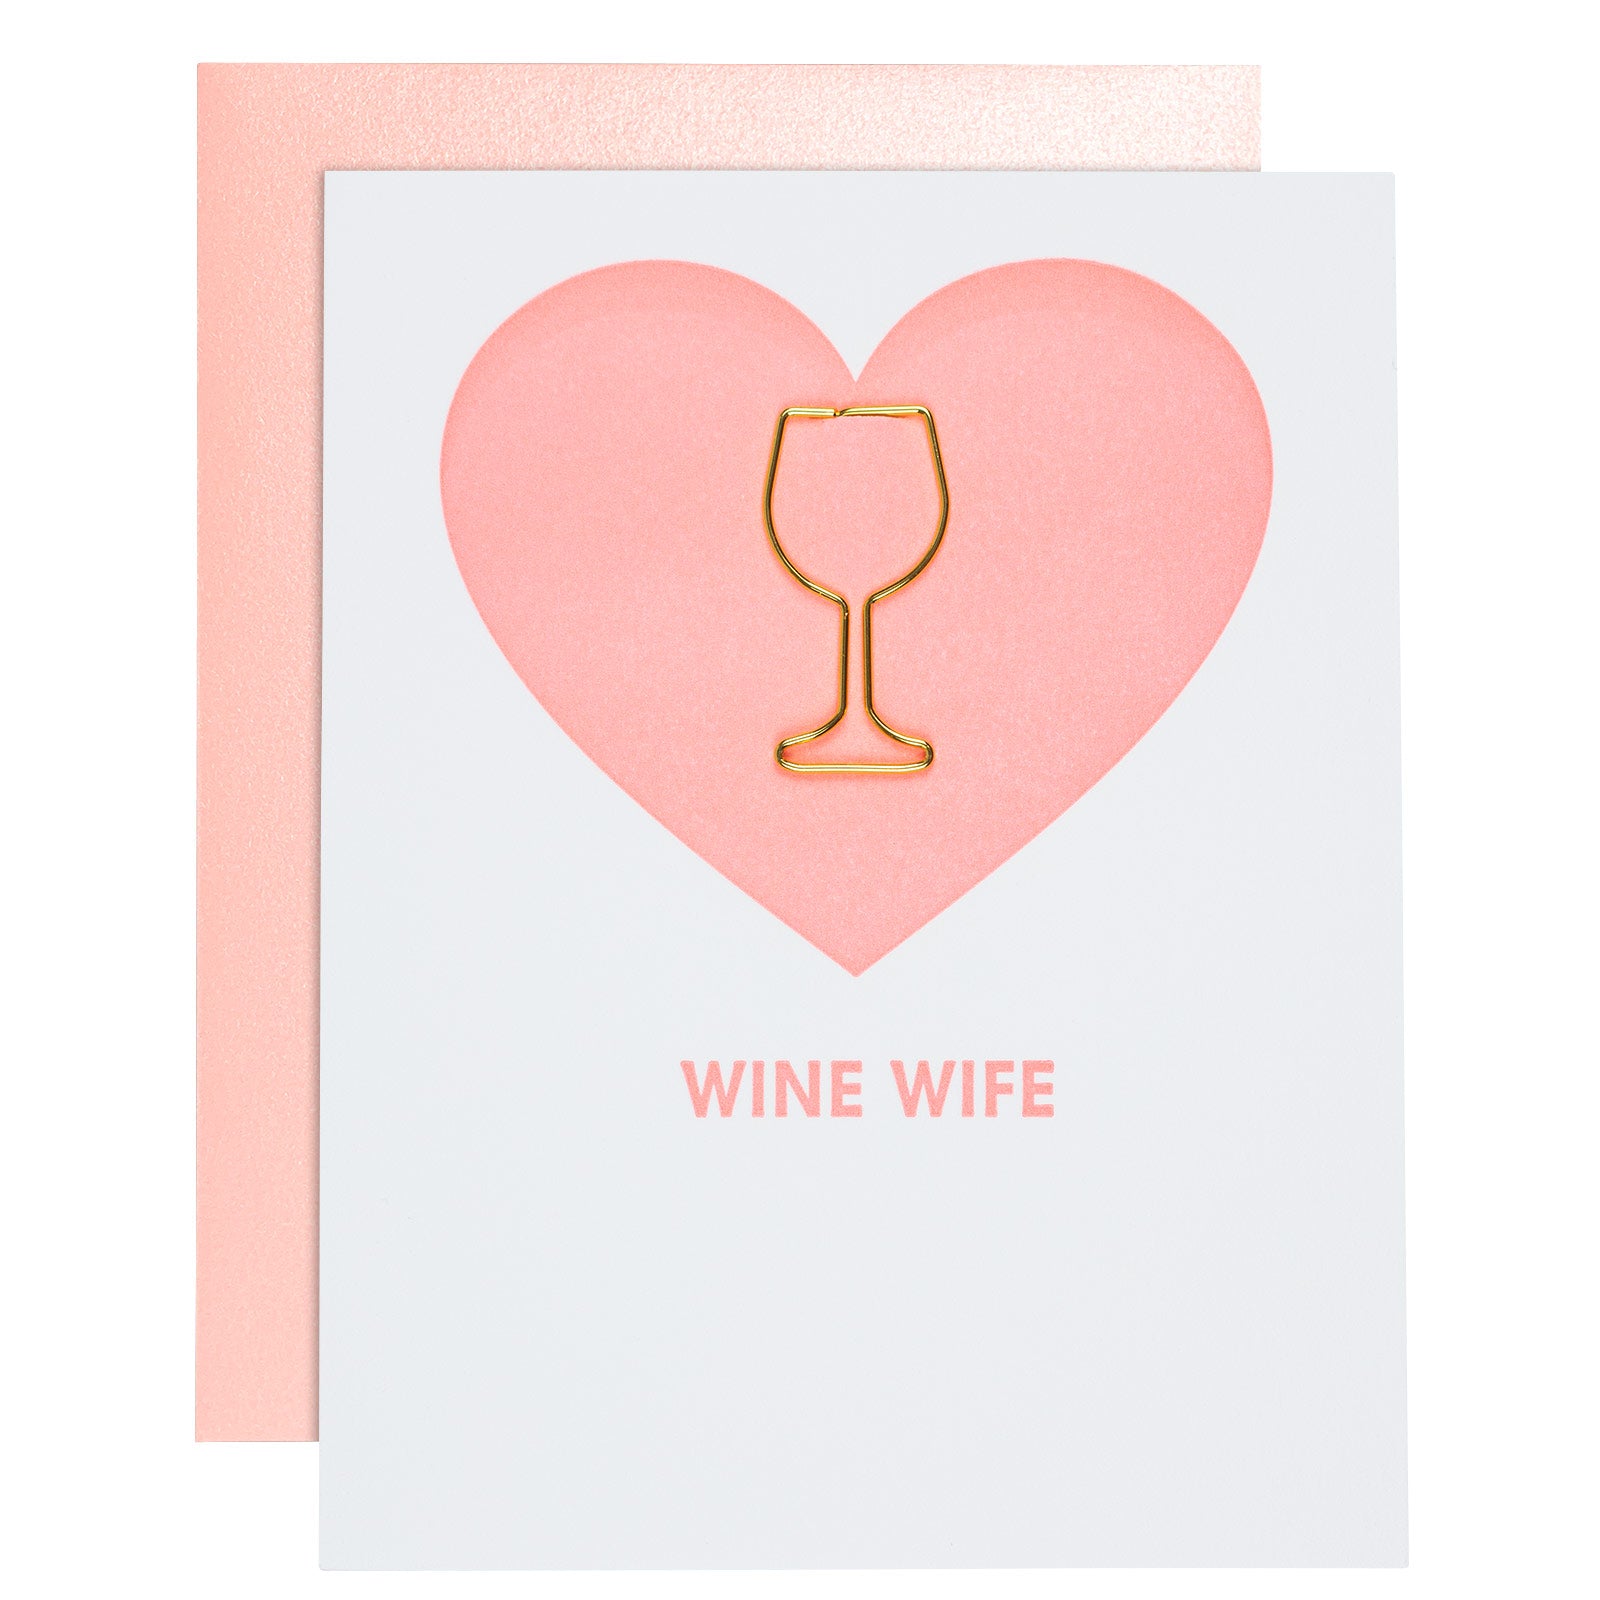 Chez Gagné Hilarious Letterpress Paperclip Cards Wine Wife